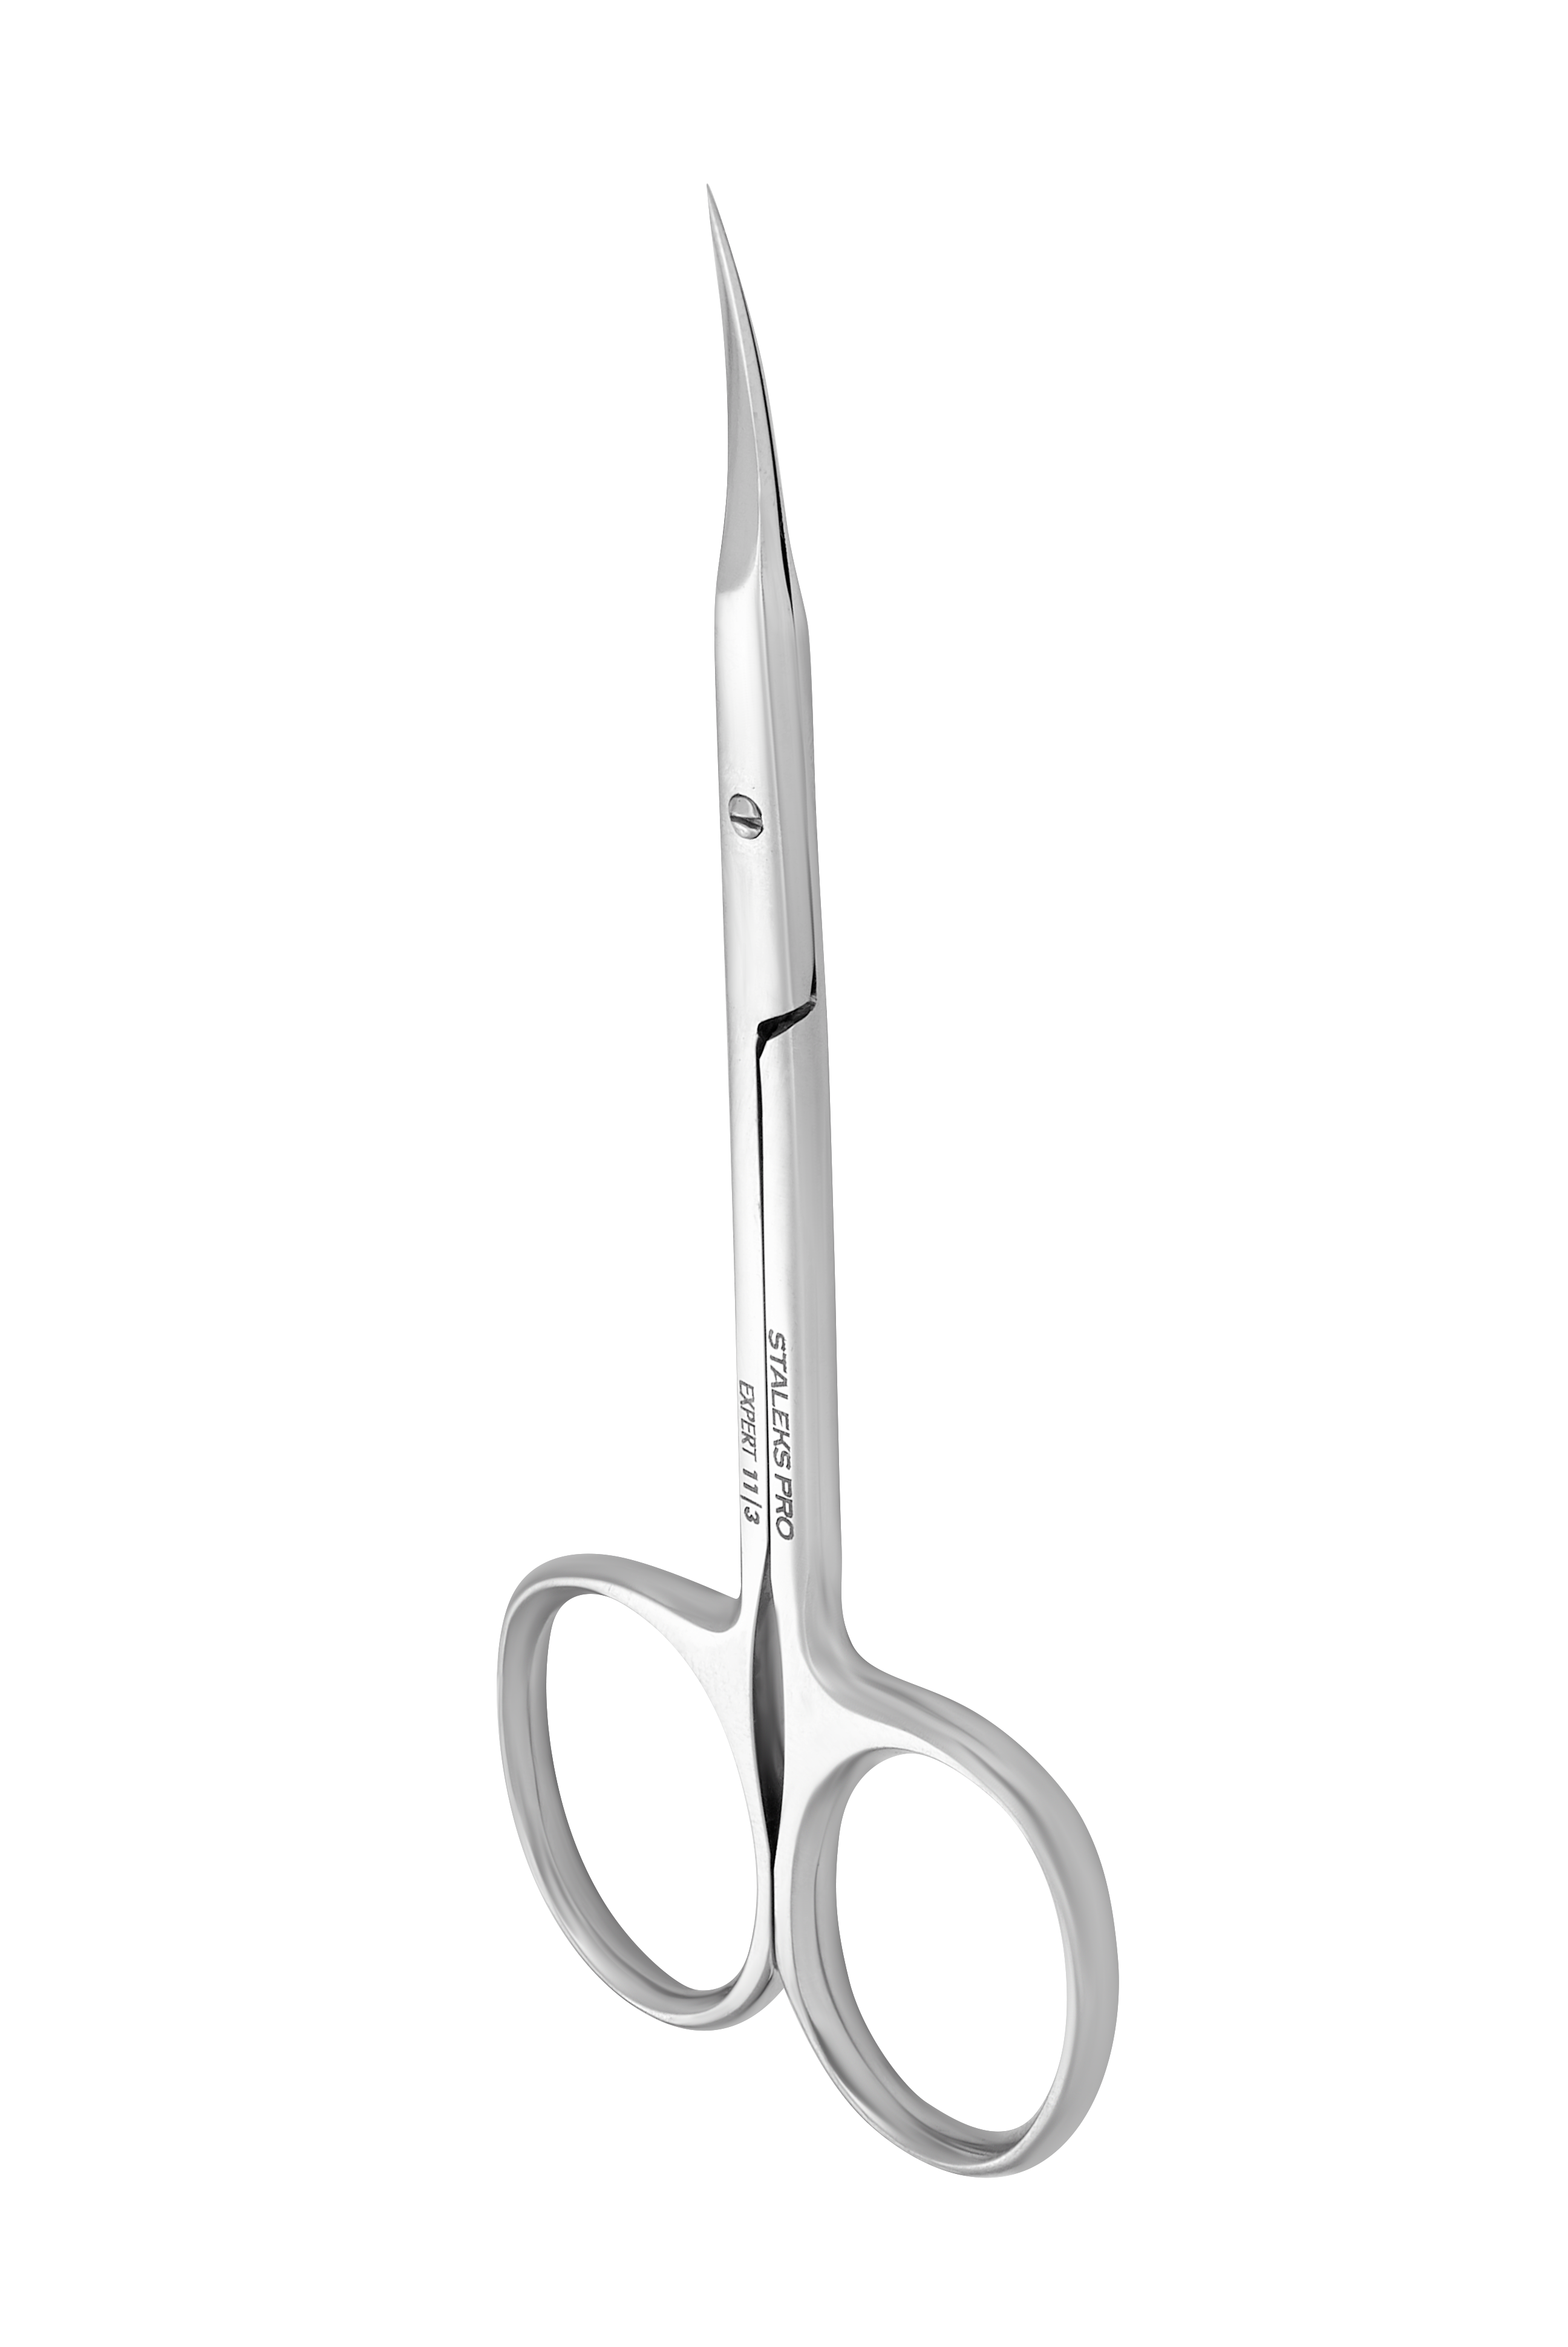 Staleks Professional cuticle scissors left handed